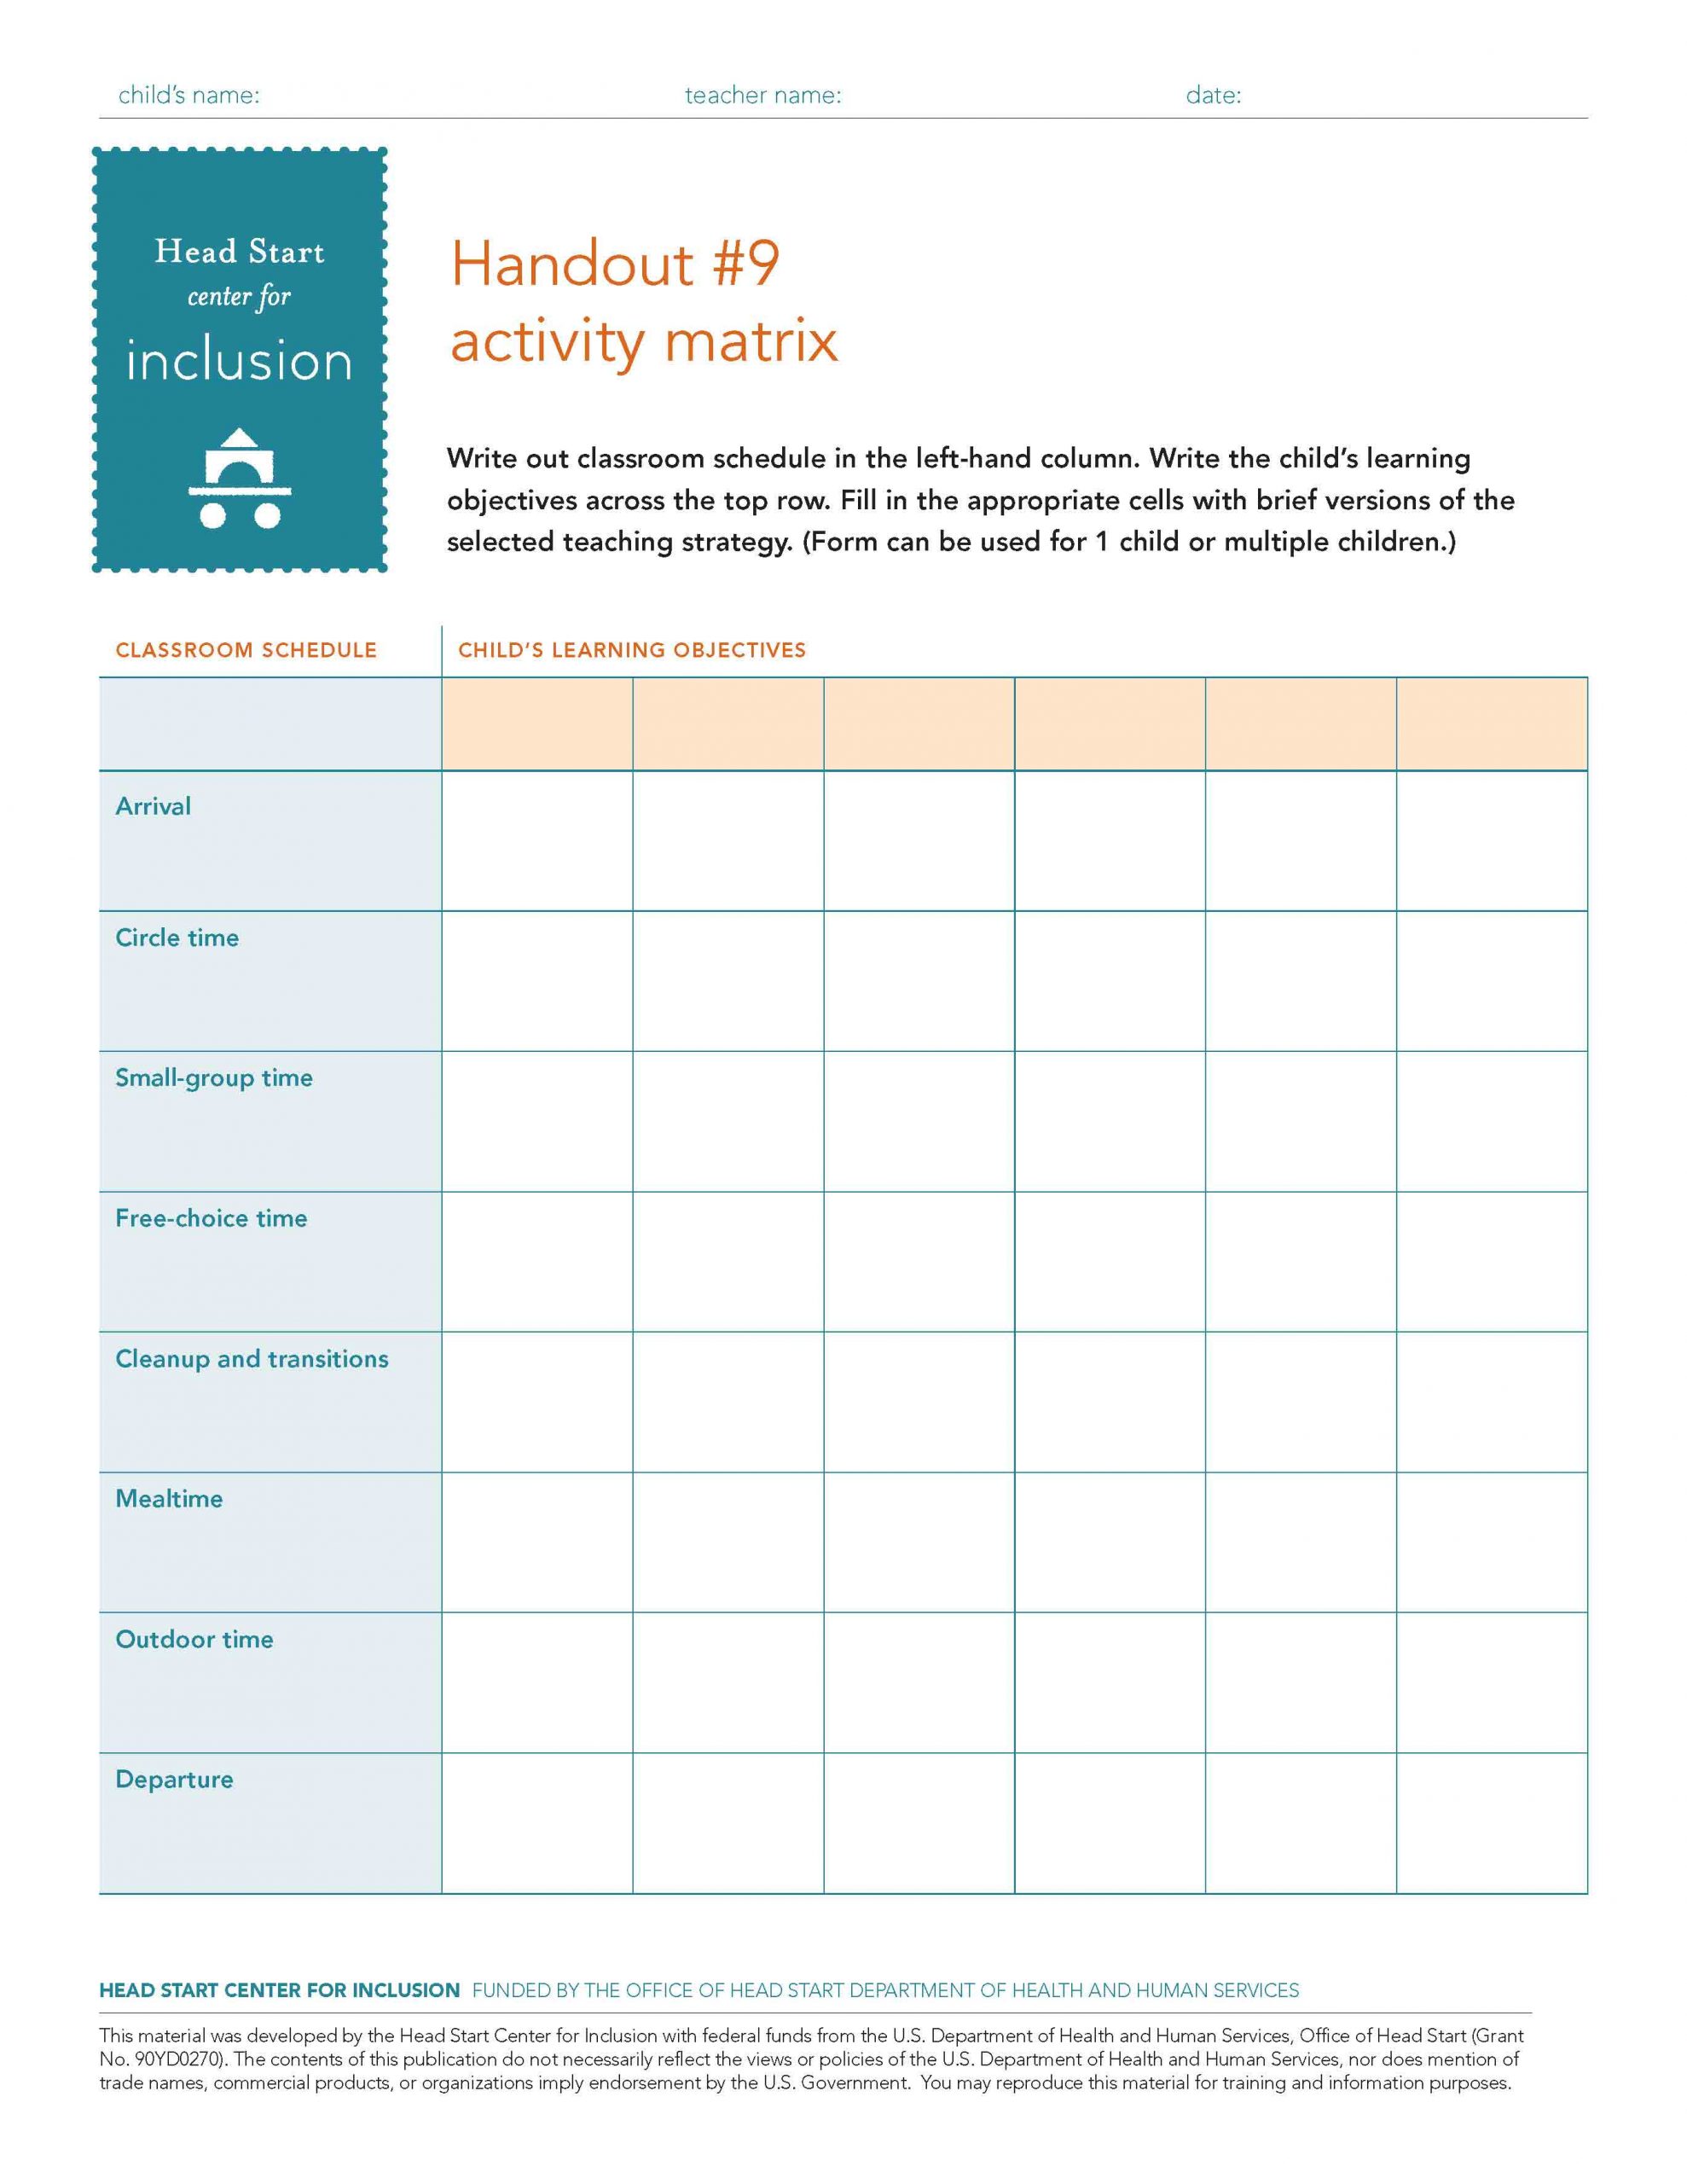 blank Activity Matrix